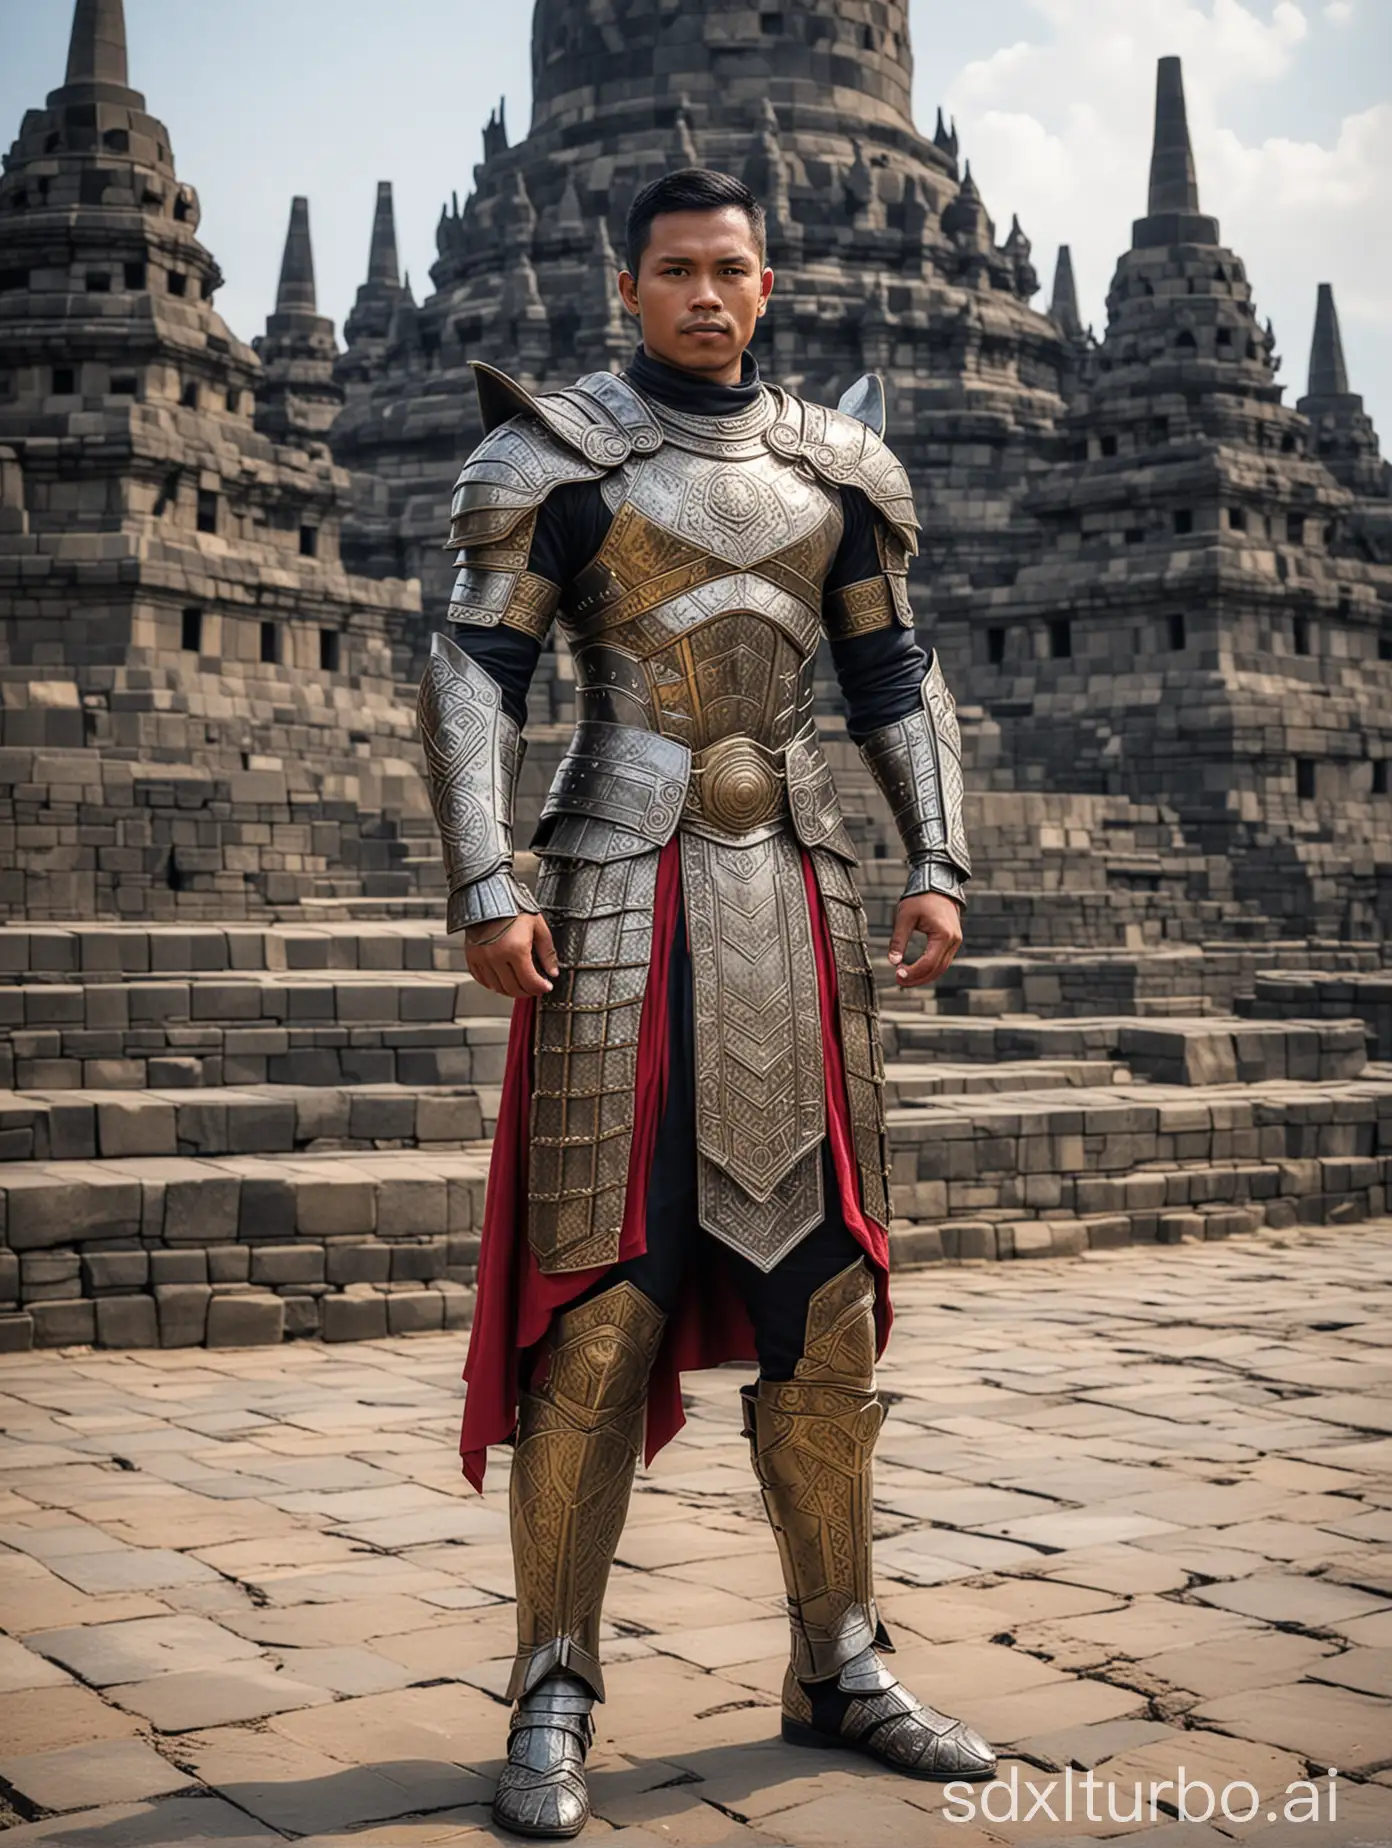 Create a superhero with Indonesian origin wearing armoured costume and he’s standing near Borobudur.